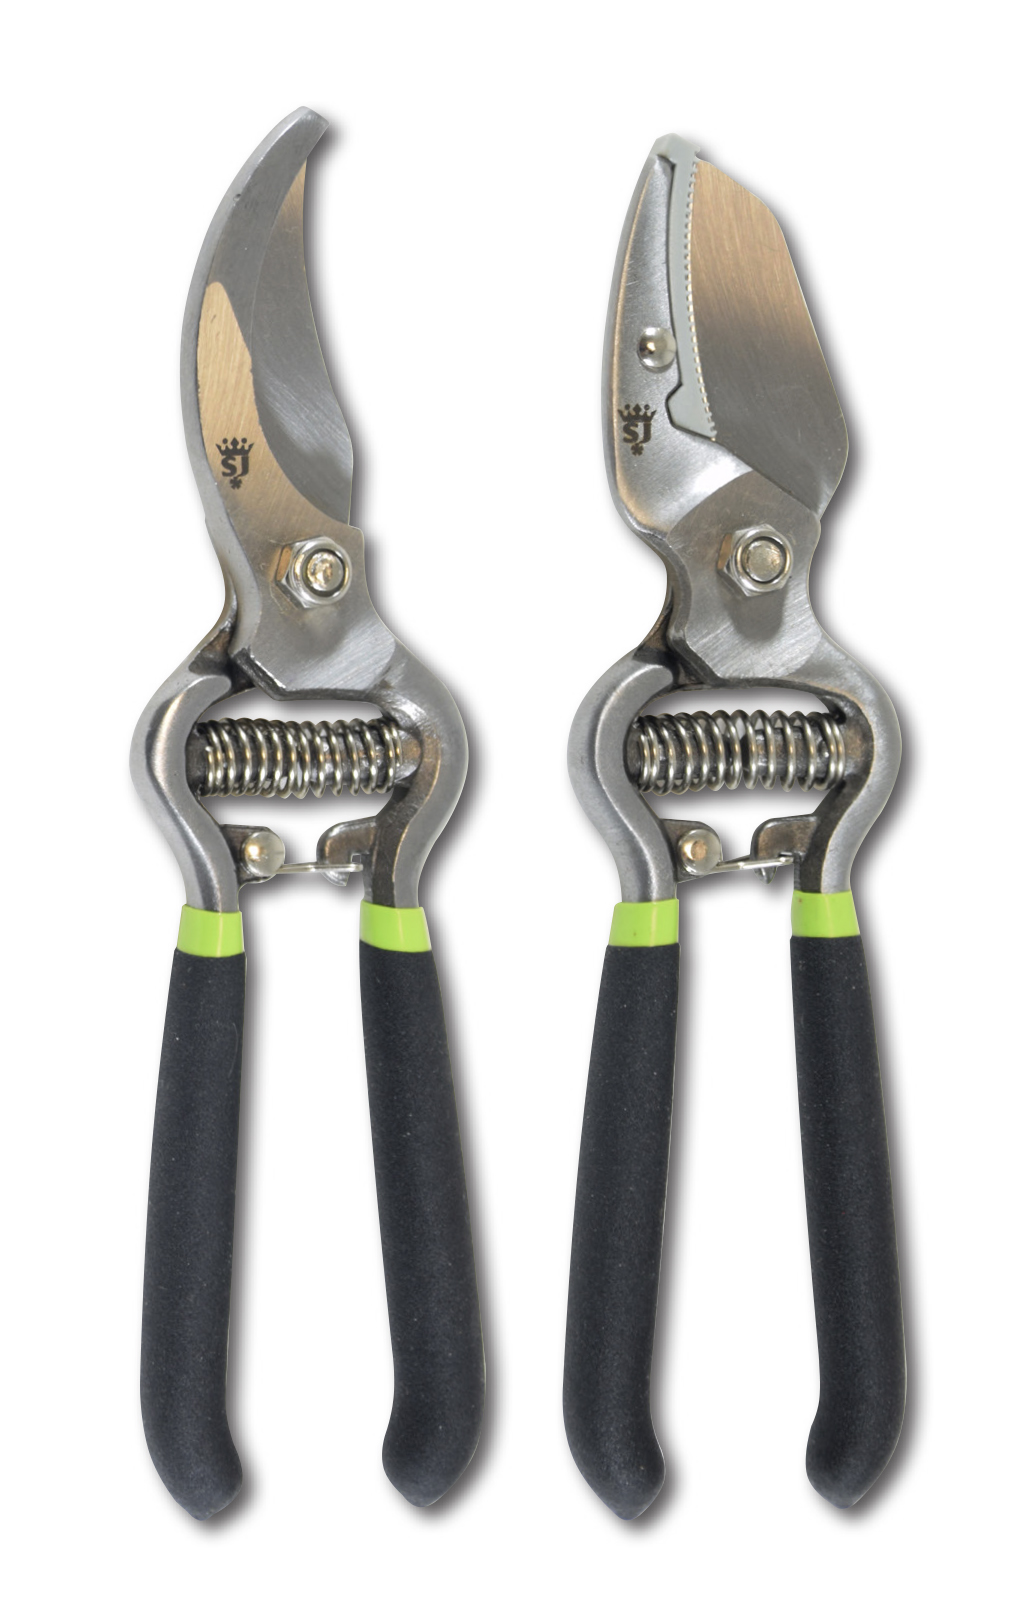 twin pack adjustable secateurs /& green shears Spear/&jackson gardener/'s gift set